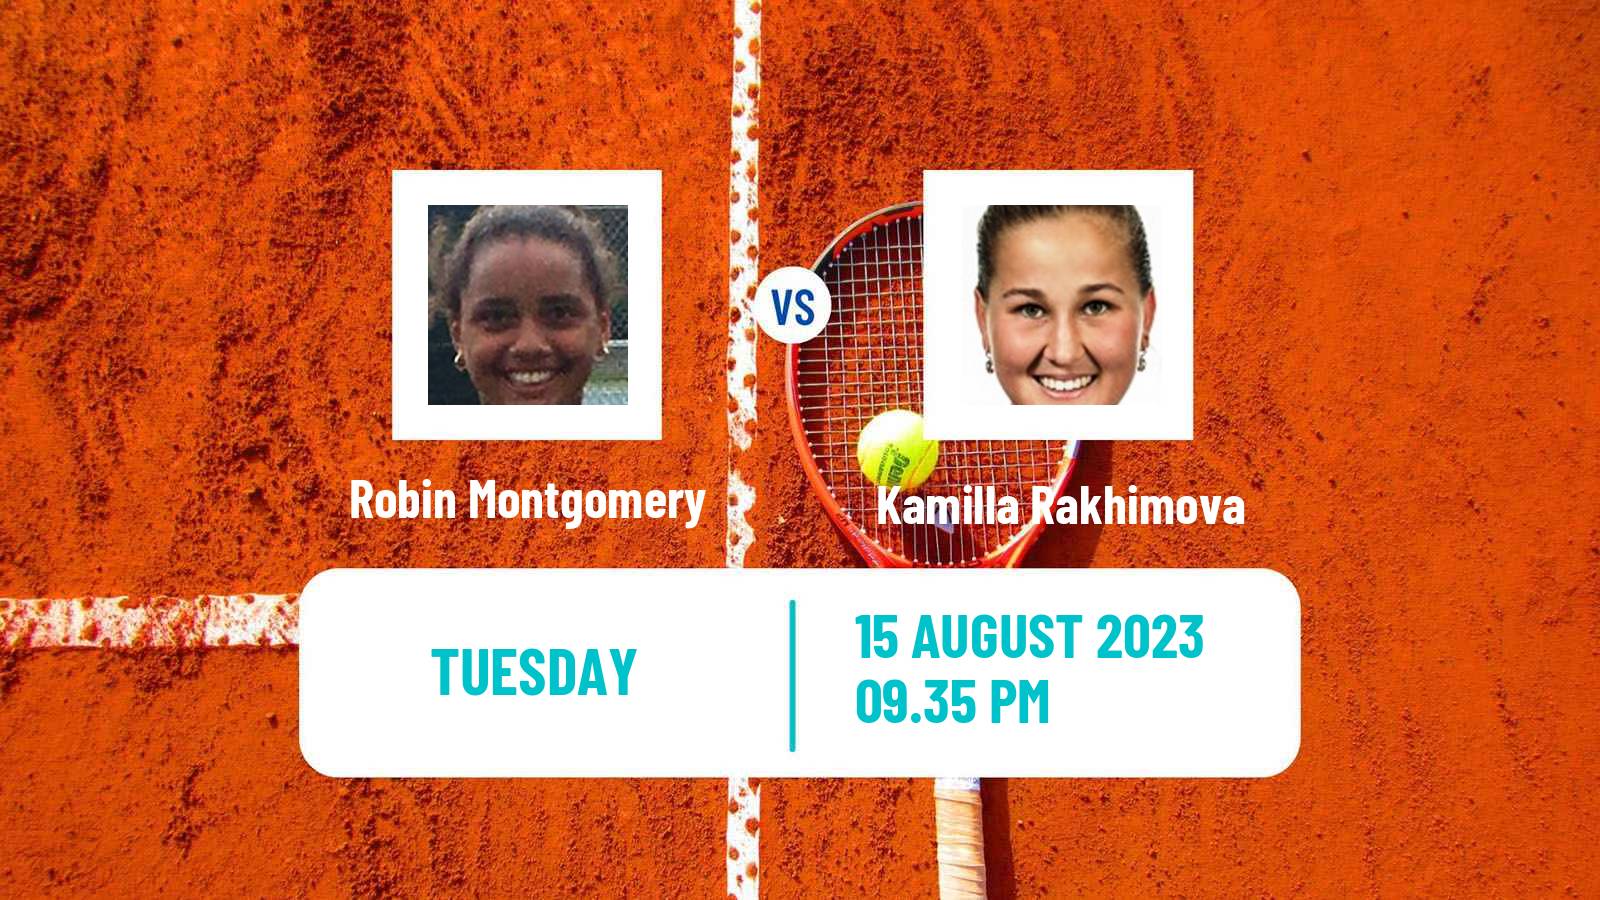 Tennis Stanford Challenger Women Robin Montgomery - Kamilla Rakhimova